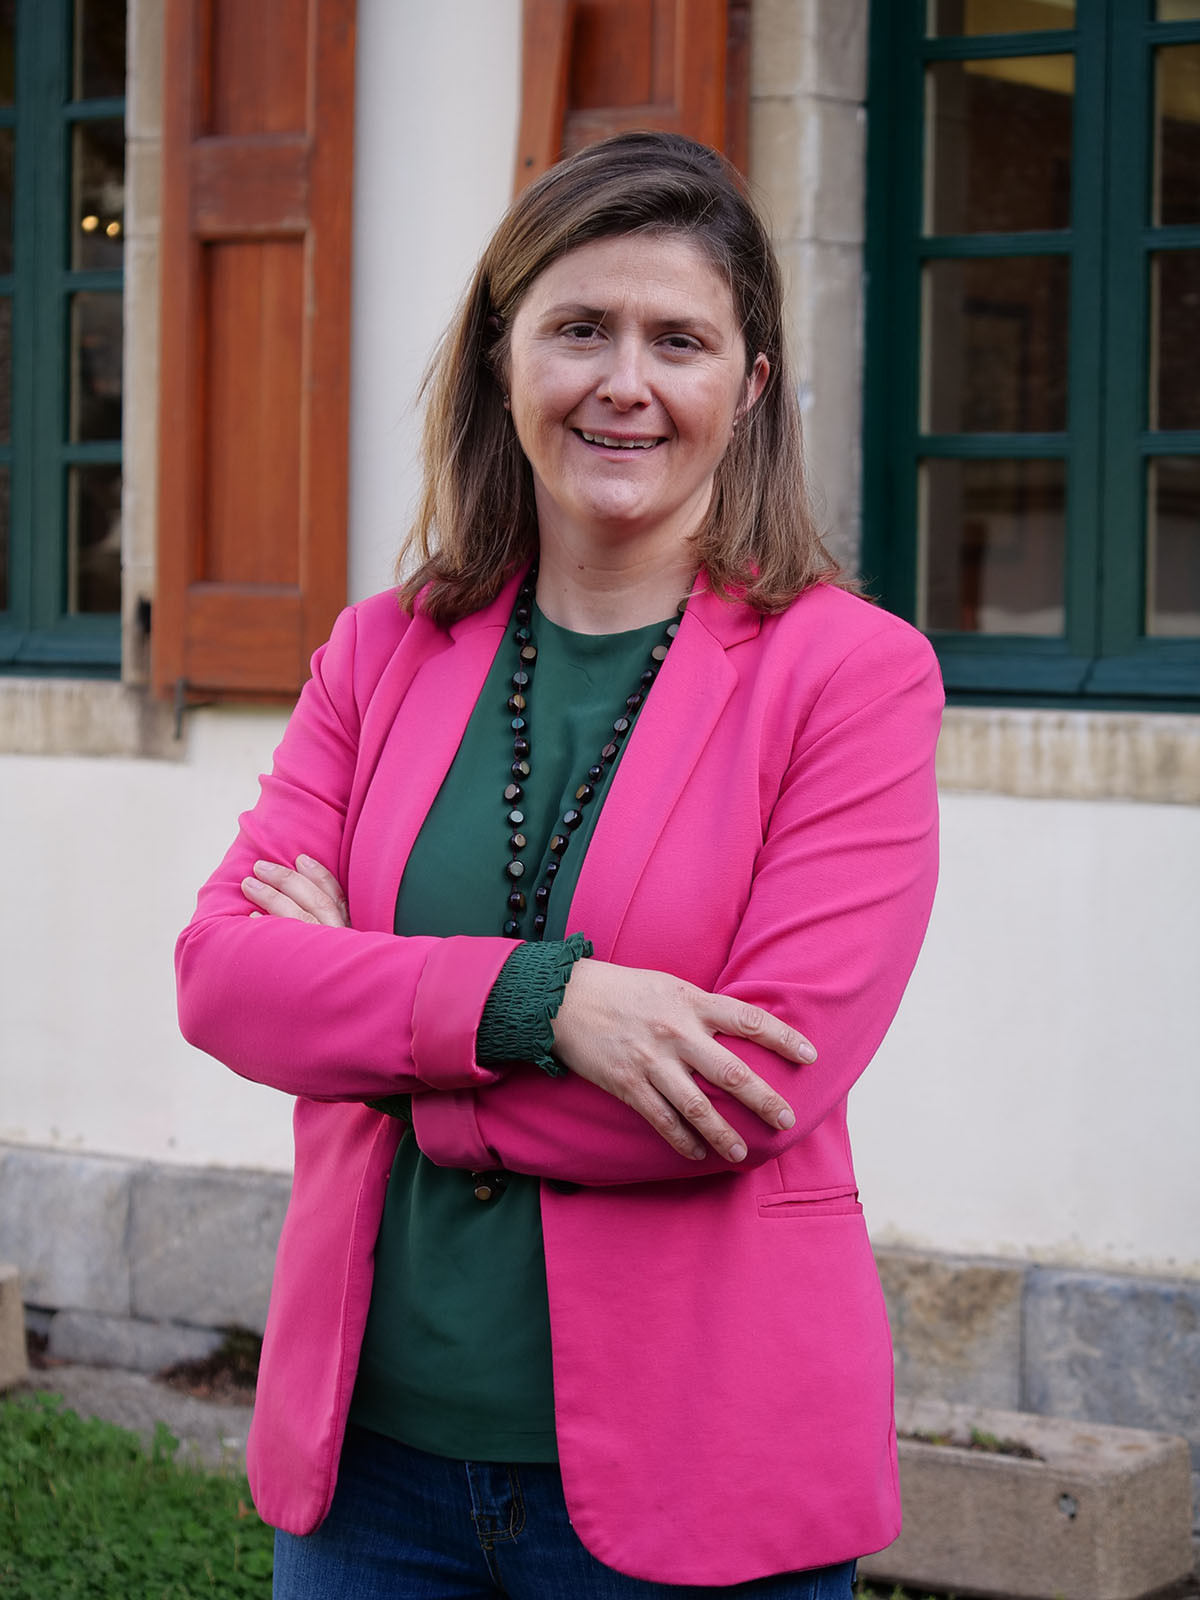 La Síndica d'Aran y candidata de Unitat d'Aran en las próximas elecciones municipales, Maria Vergés